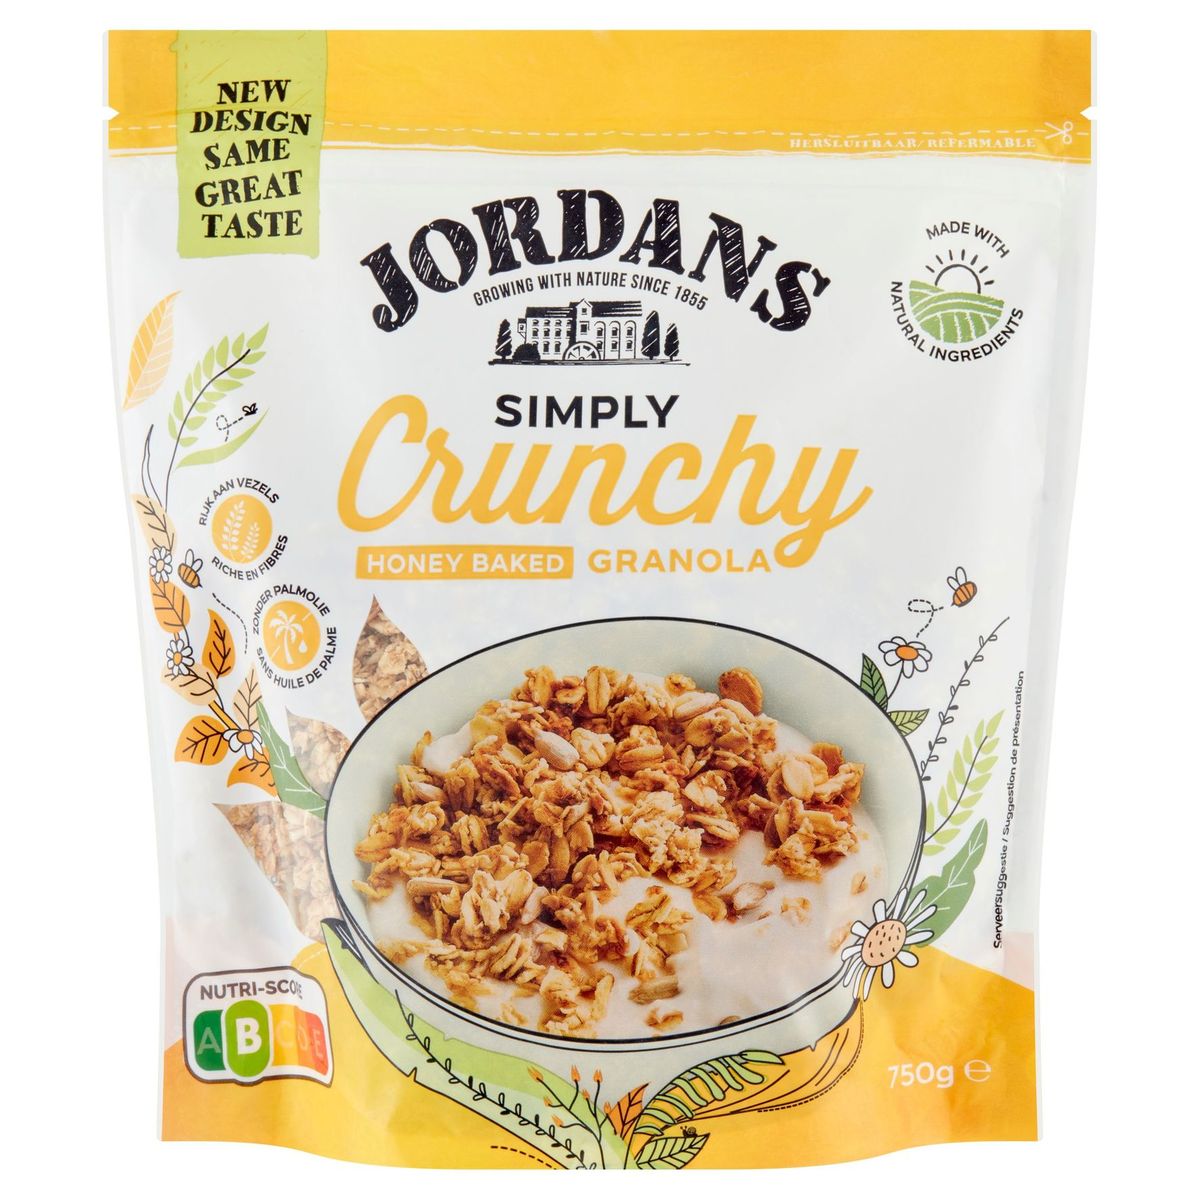 Jordans Simply Crunchy Honey Baked Granola 750 g